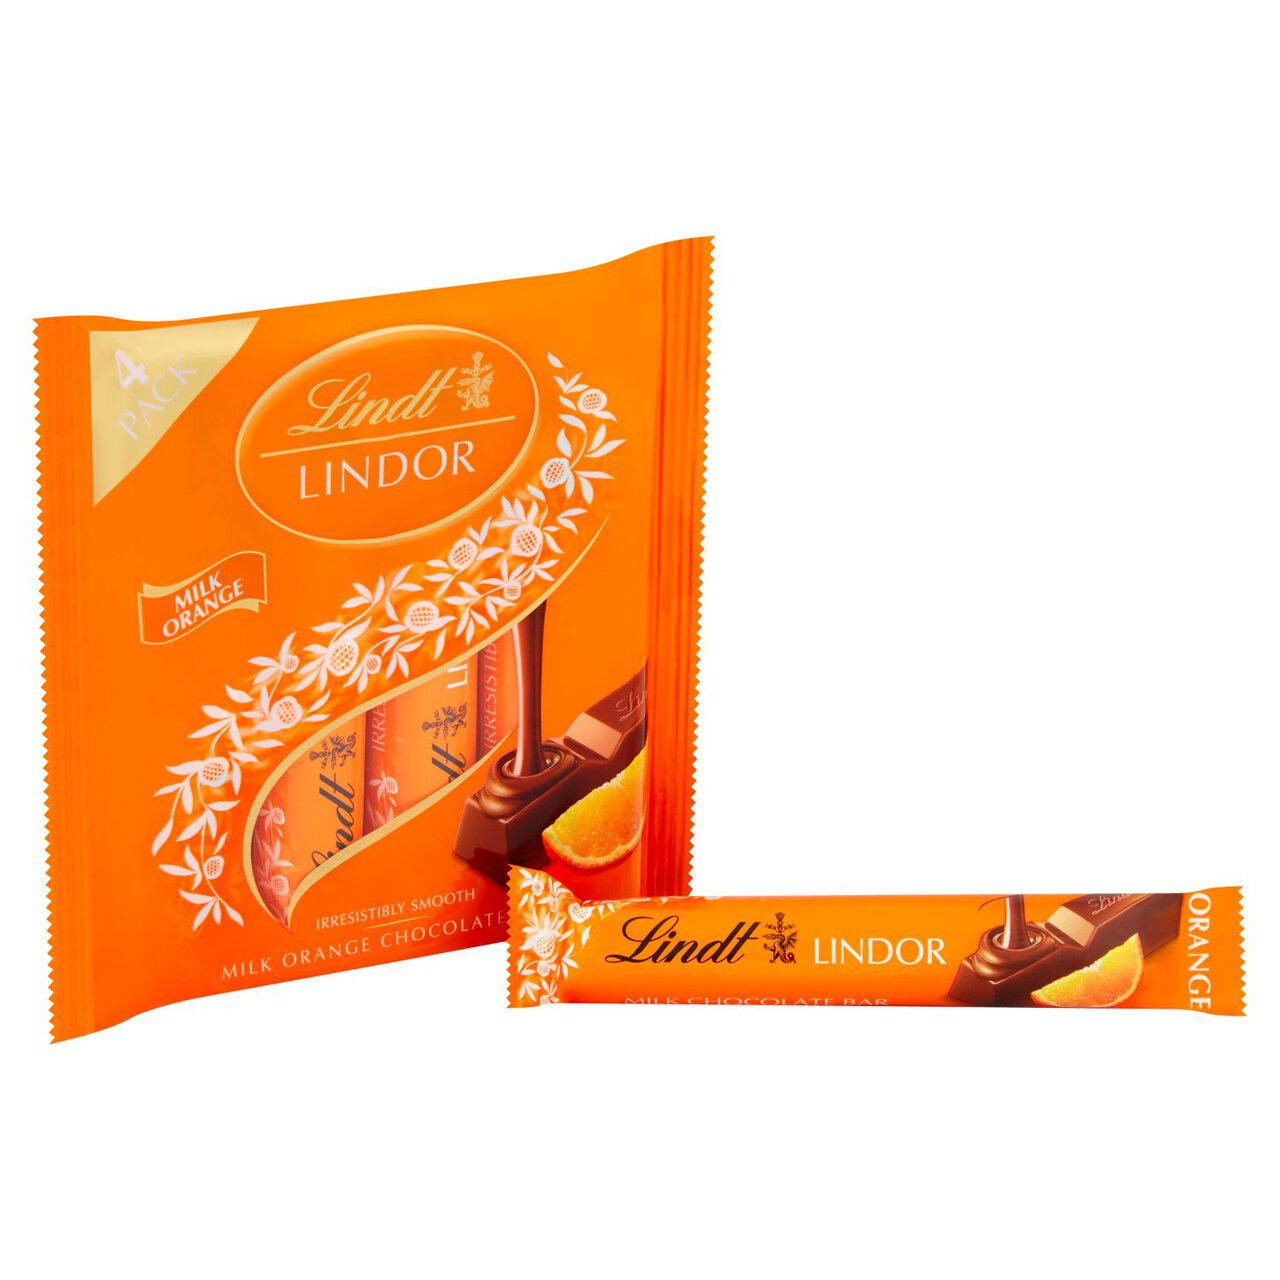 Lindt Lindor 4 Milk Orange Chocolate Bars 100g